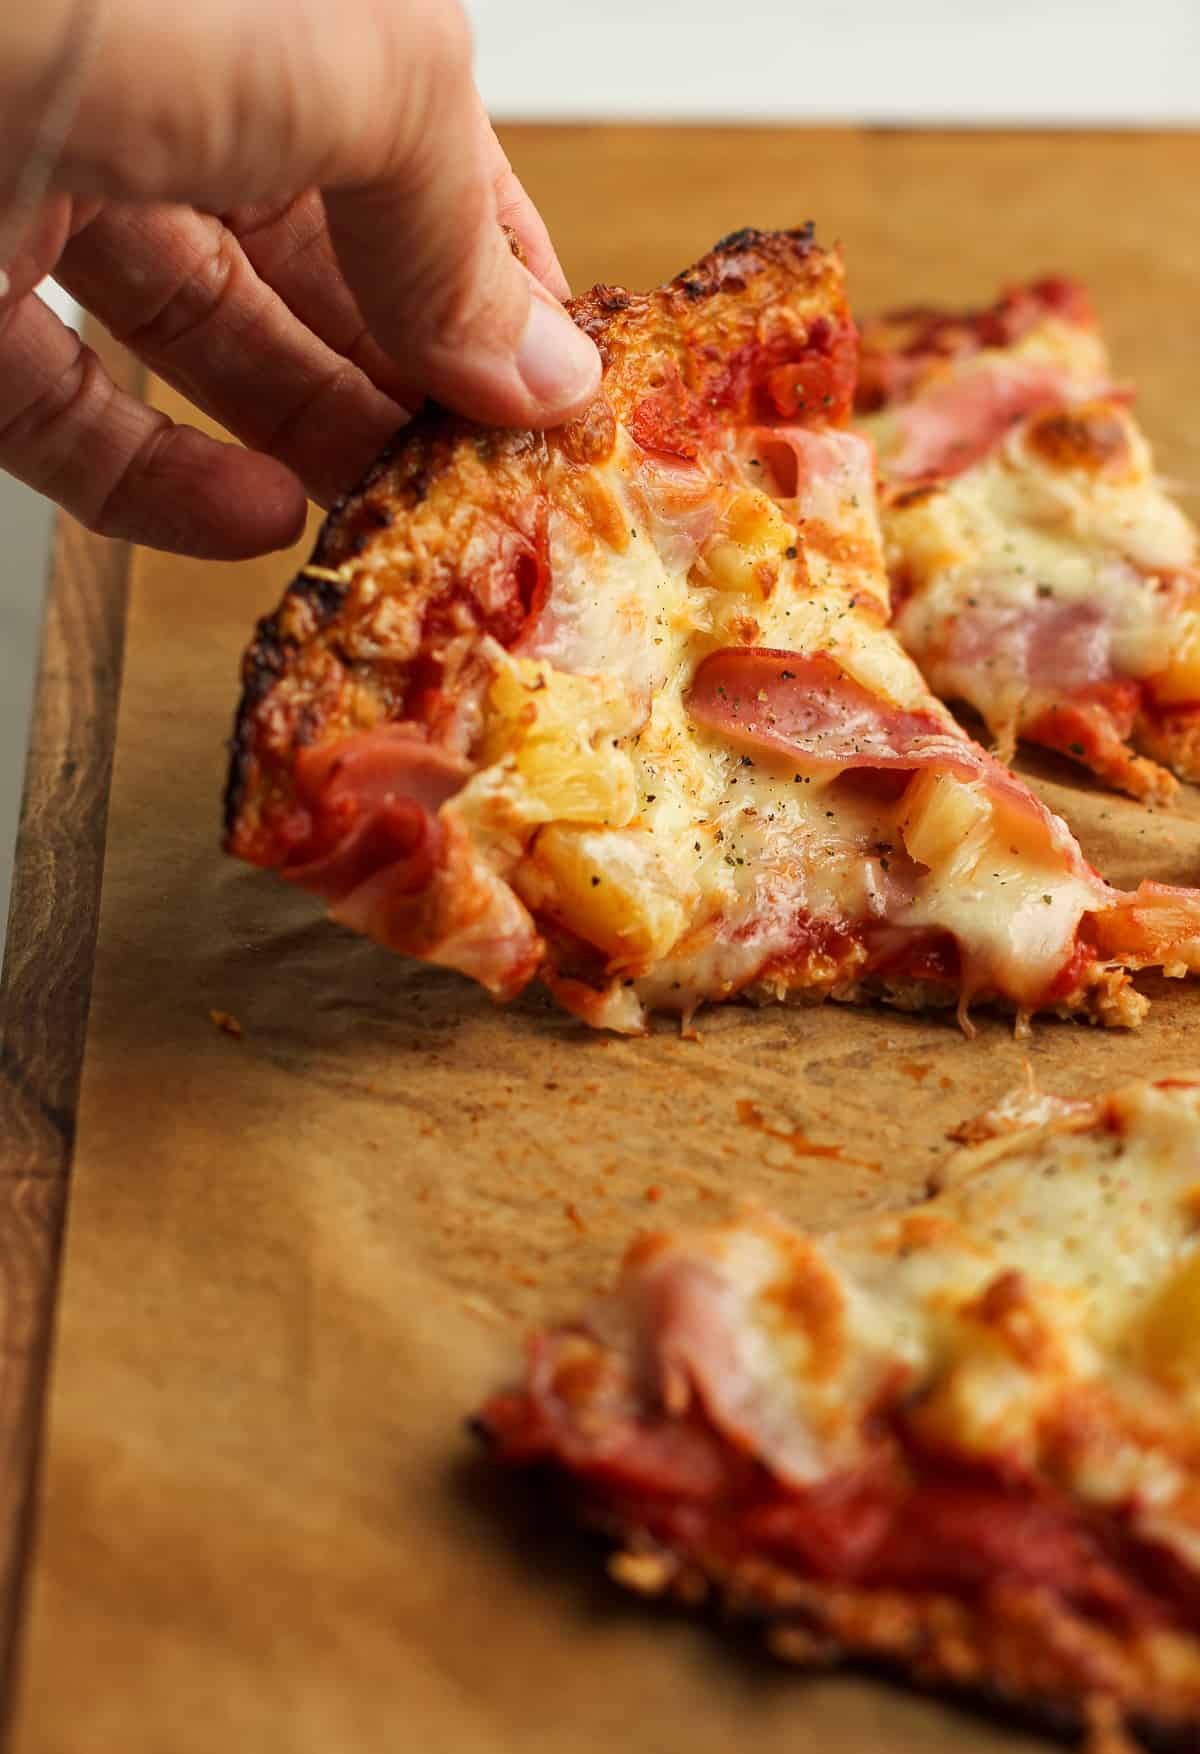 A hand lifting up a piece of Hawaiian pizza on cauliflower crust.